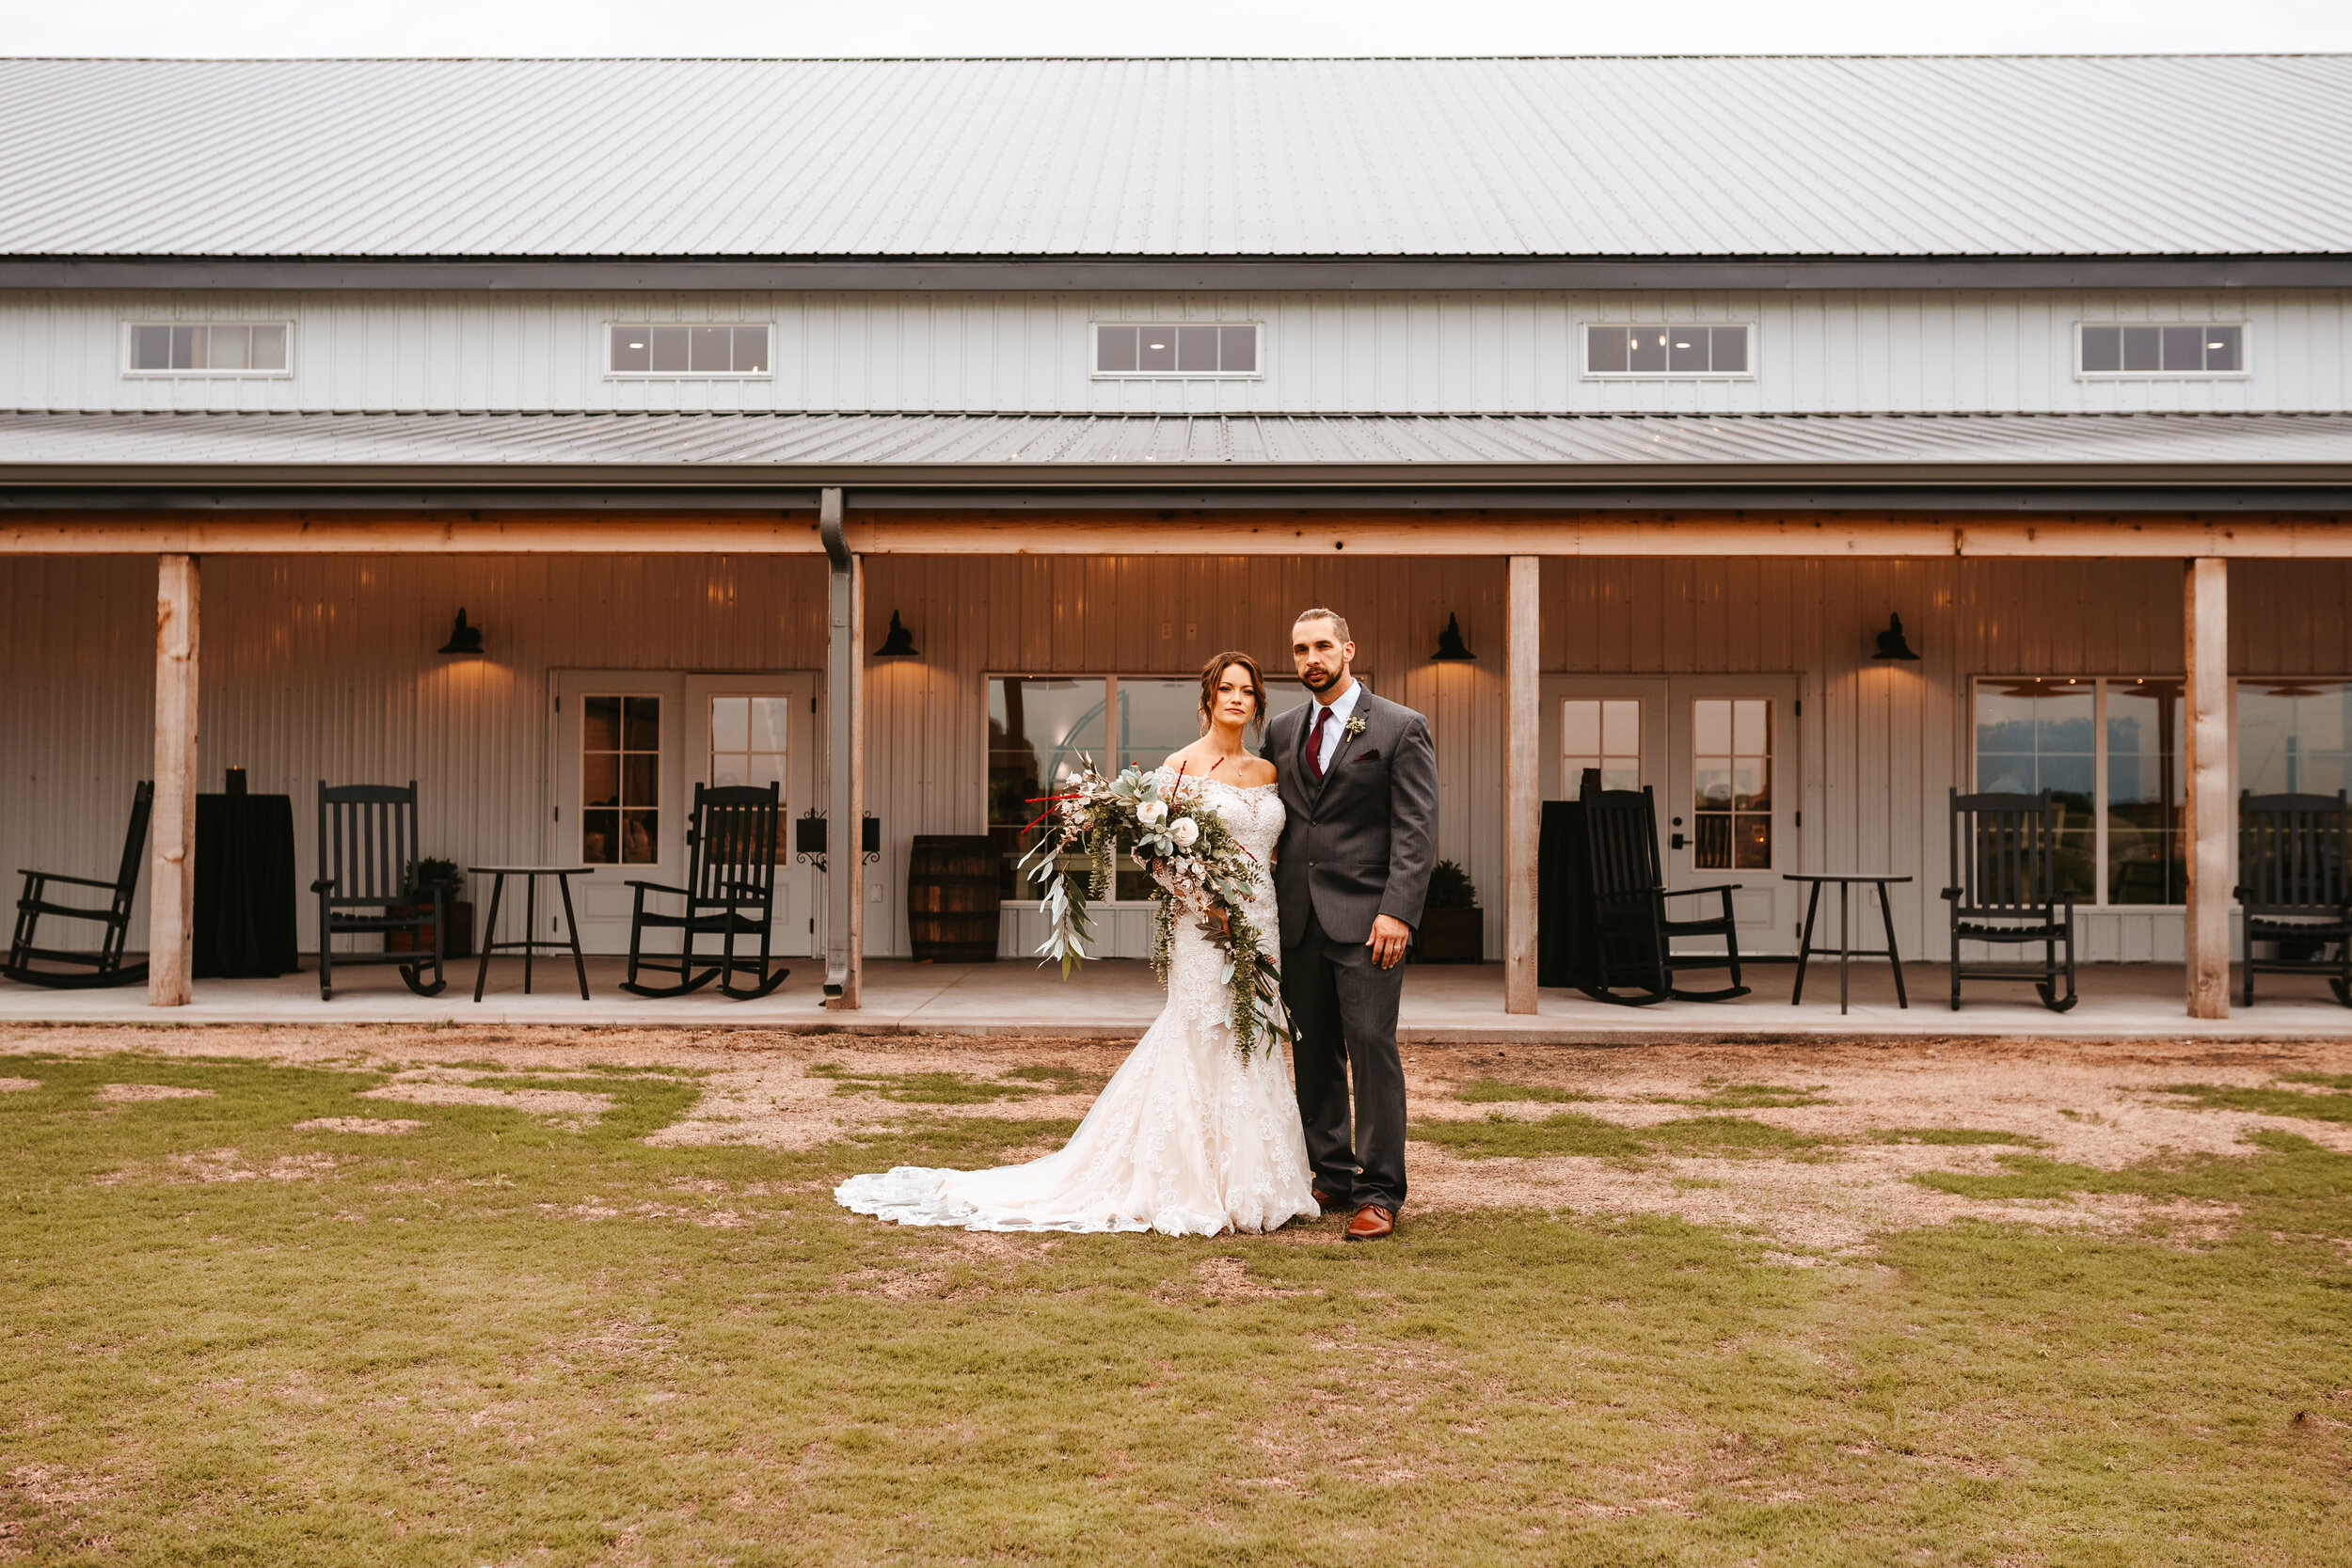 Tosha + Matt - Newton, Kansas Elegant Wedding at The Barn at Grace Hill106.jpg